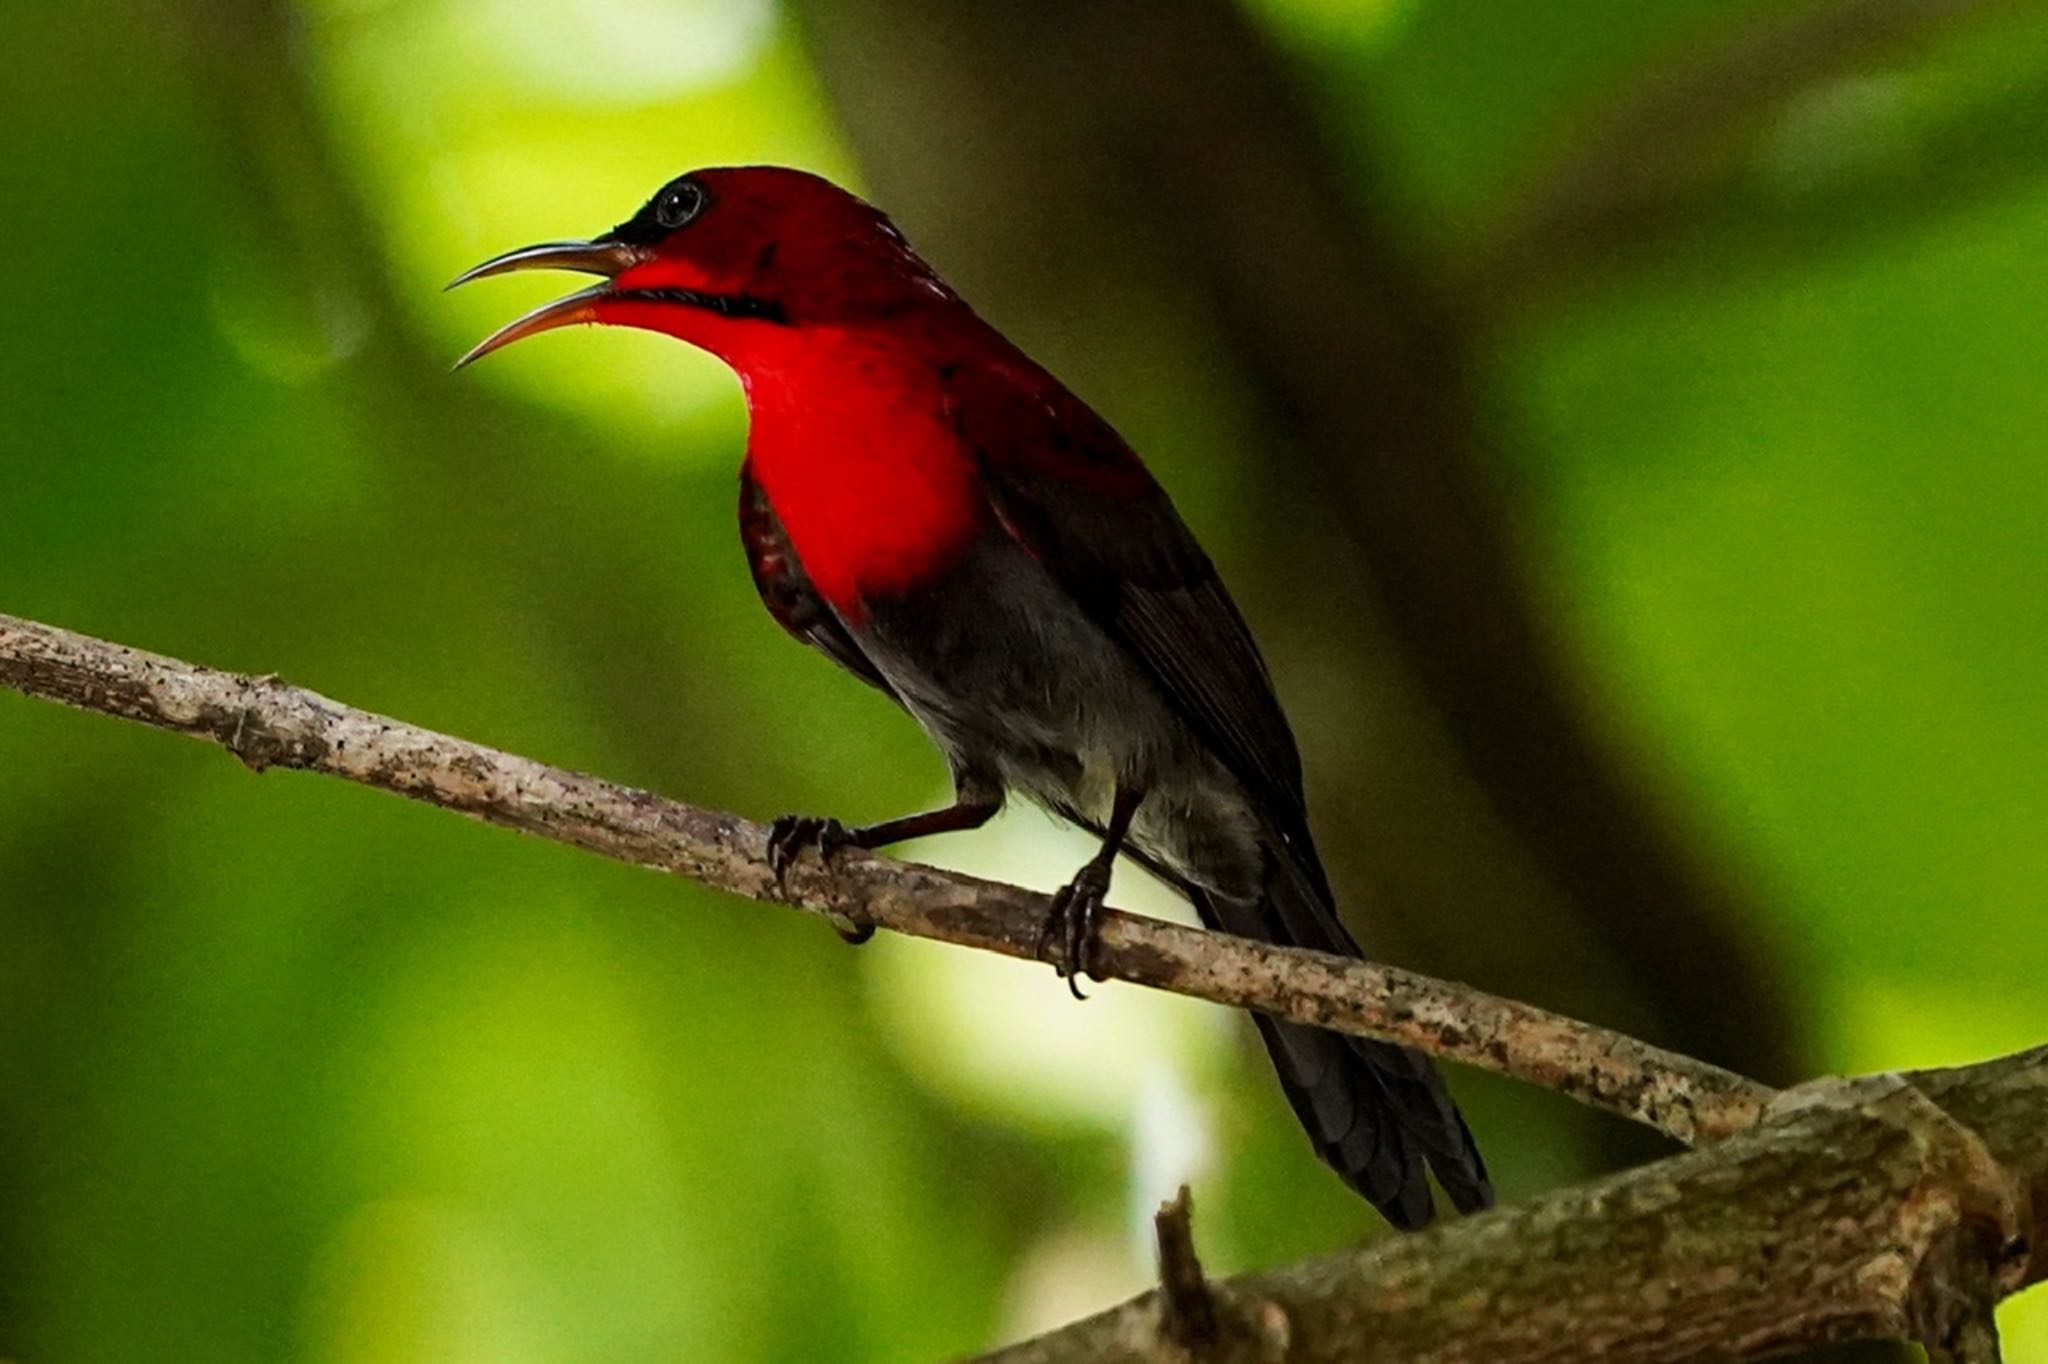 Photo of Crimson Sunbird at Sungei Buloh Wetland Reserve by T K